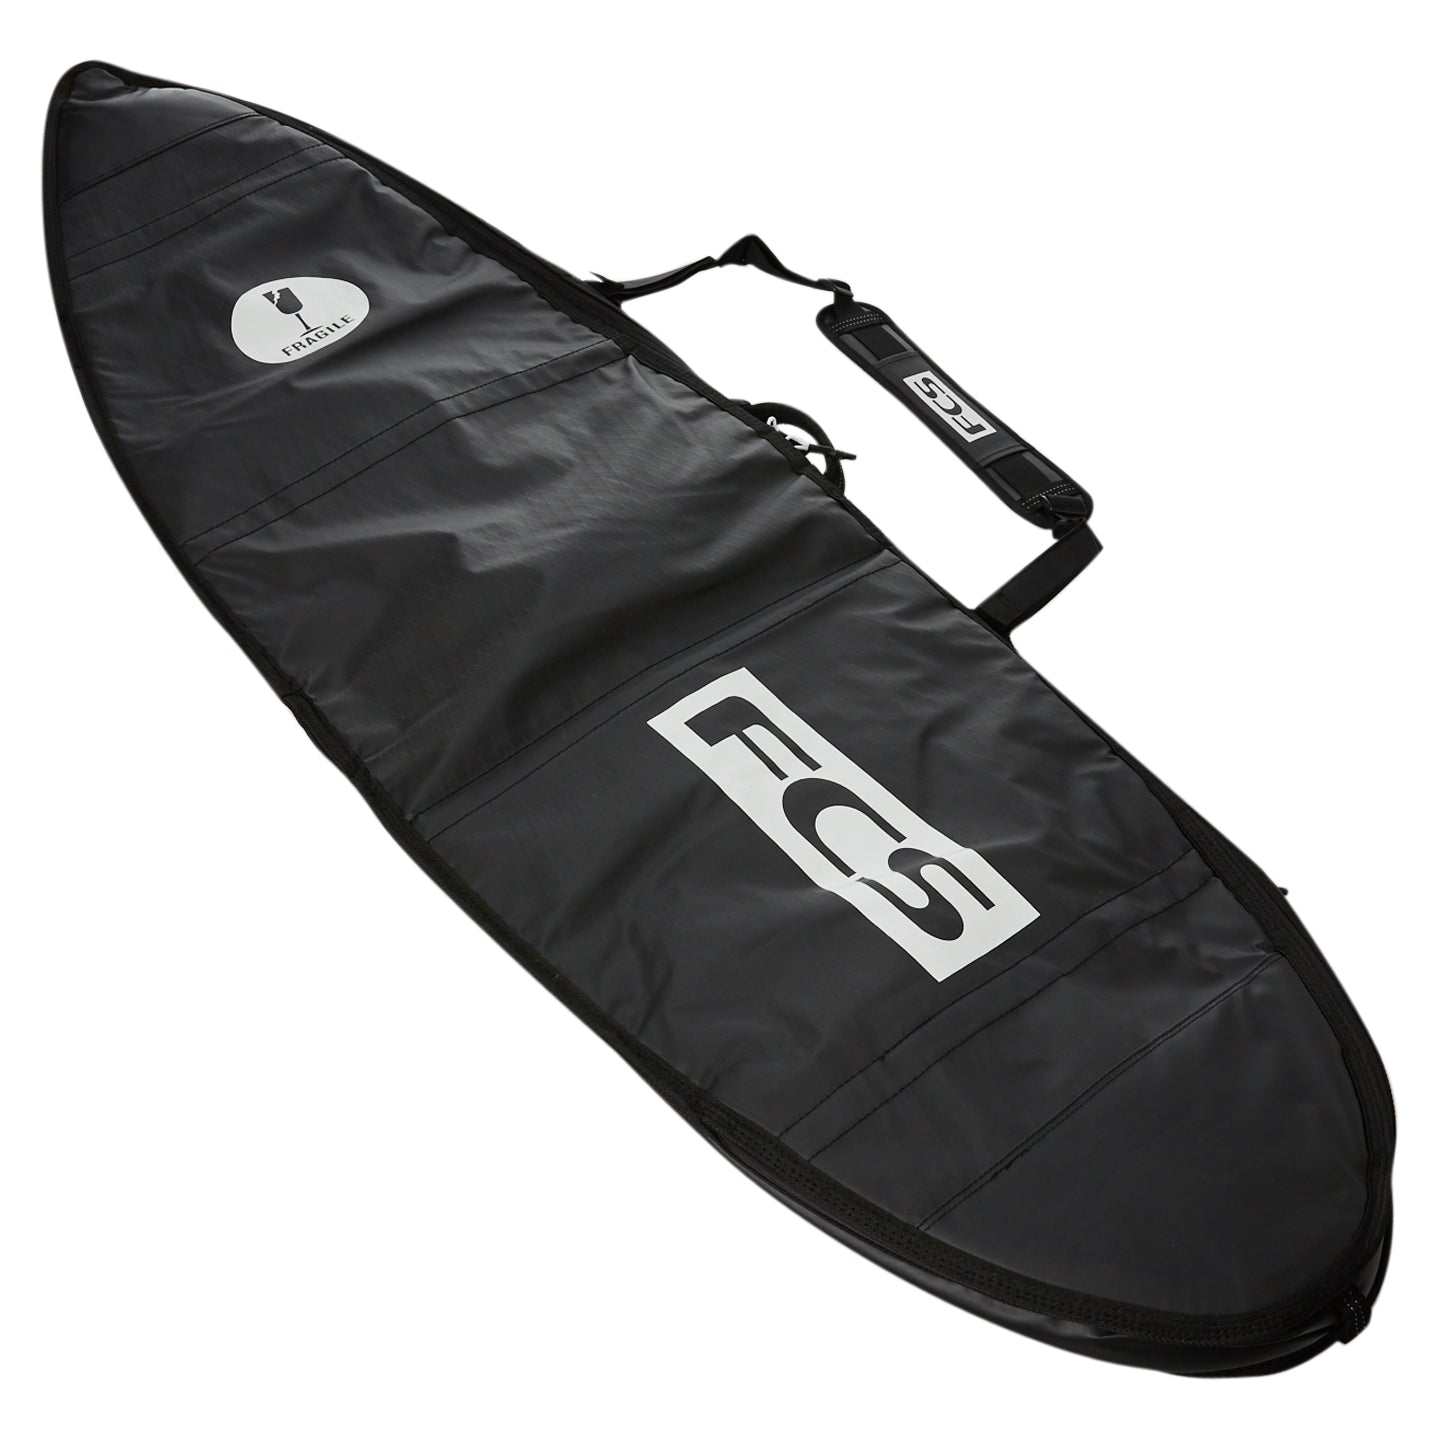 FCS Travel 1 All Purpose Boardbag Black-Grey 6ft0in